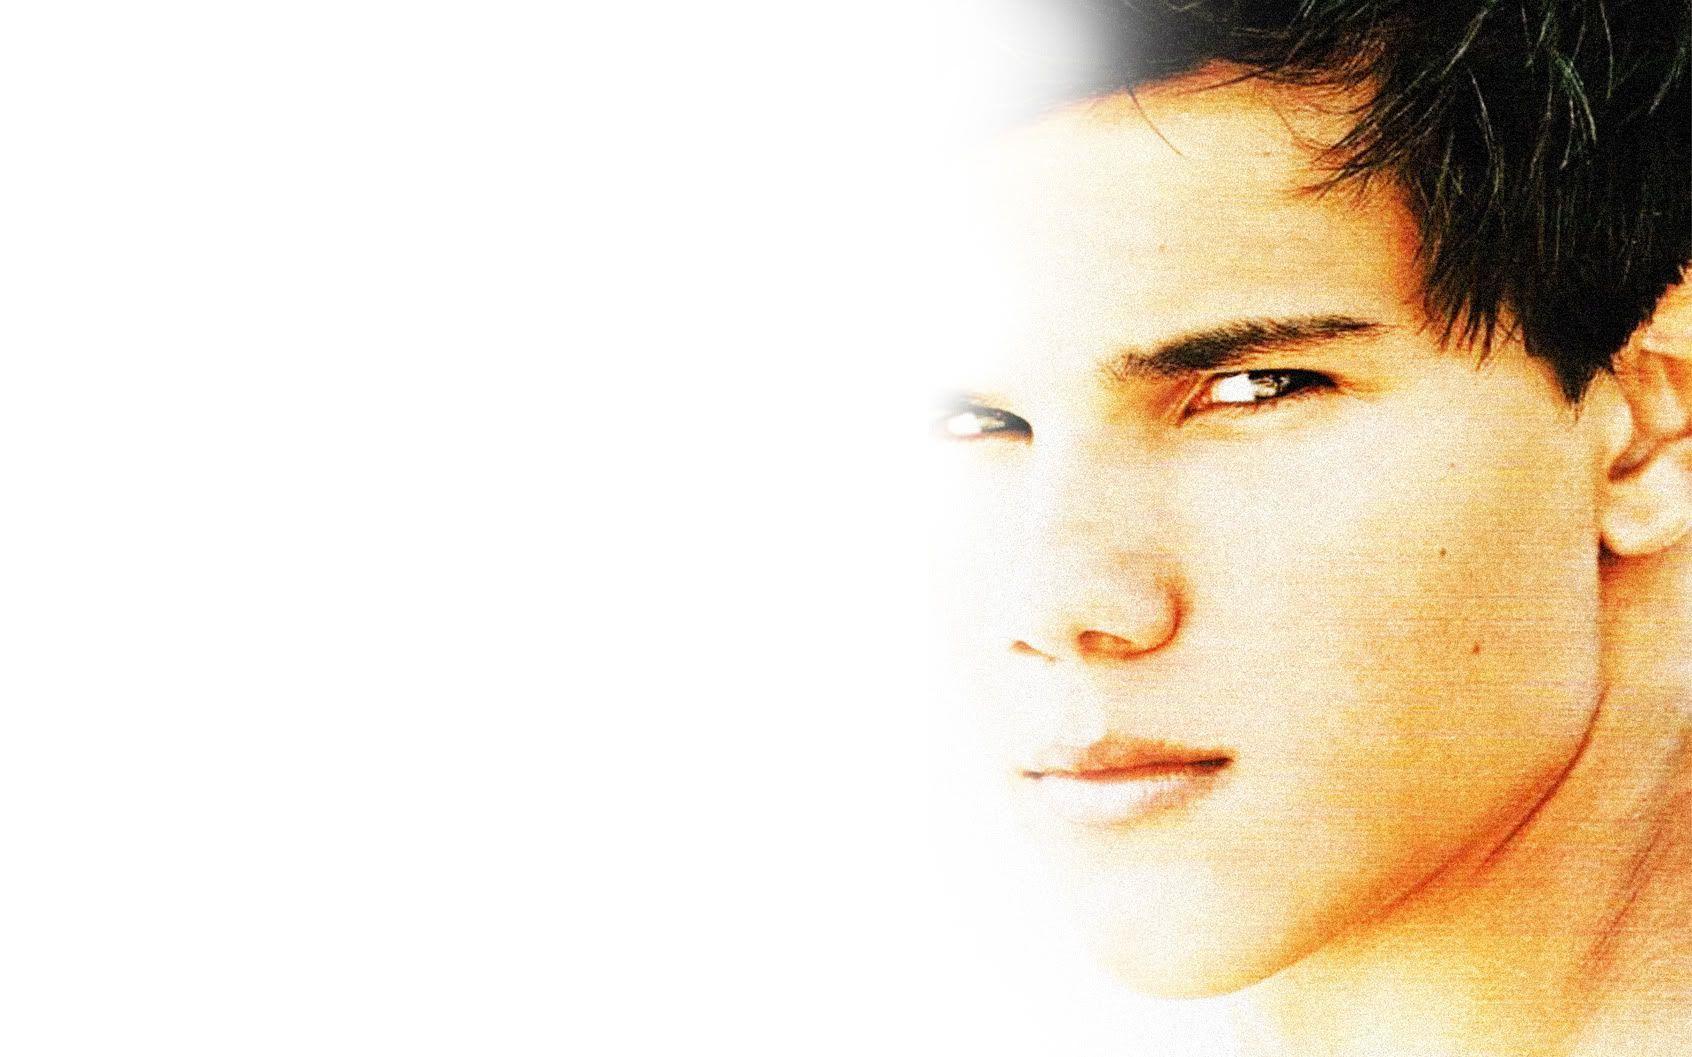 Taylor Lautner Image Free Download